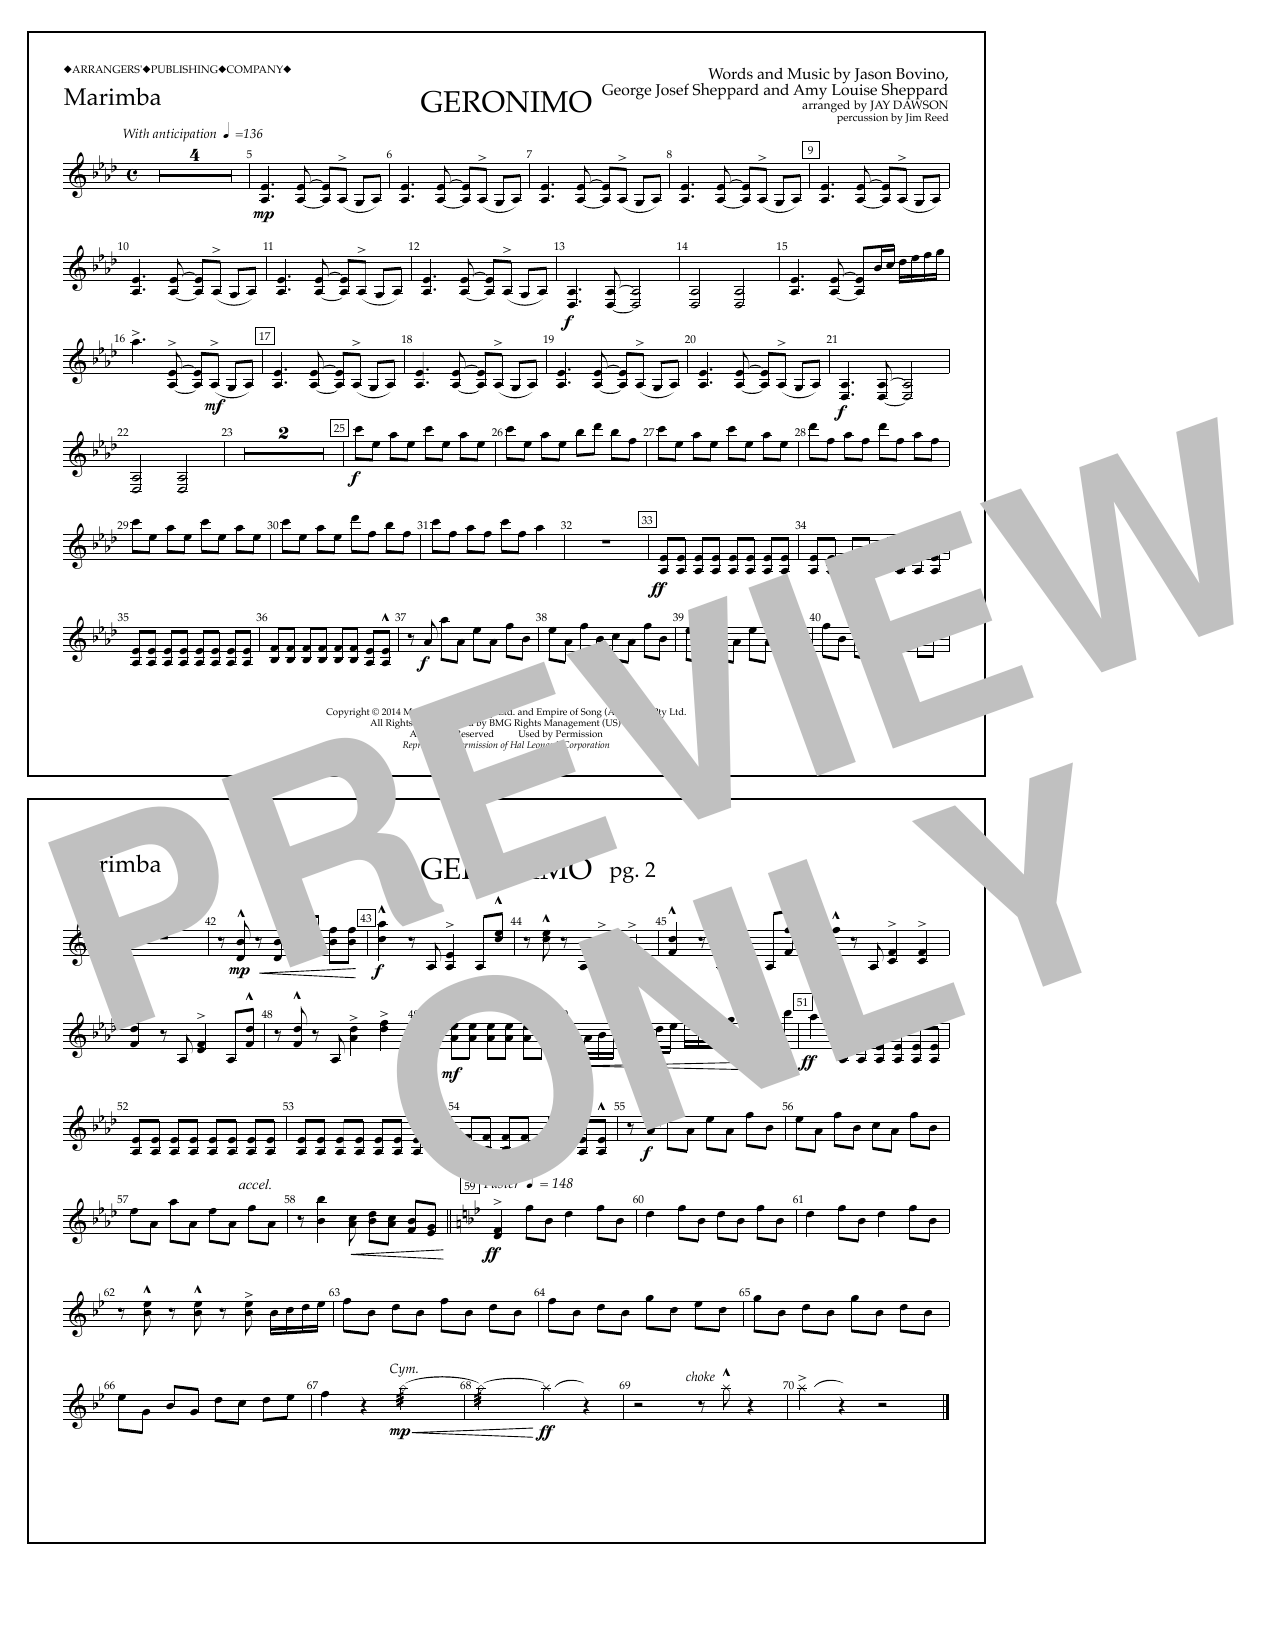 Jay Dawson Geronimo - Marimba Sheet Music Notes & Chords for Marching Band - Download or Print PDF